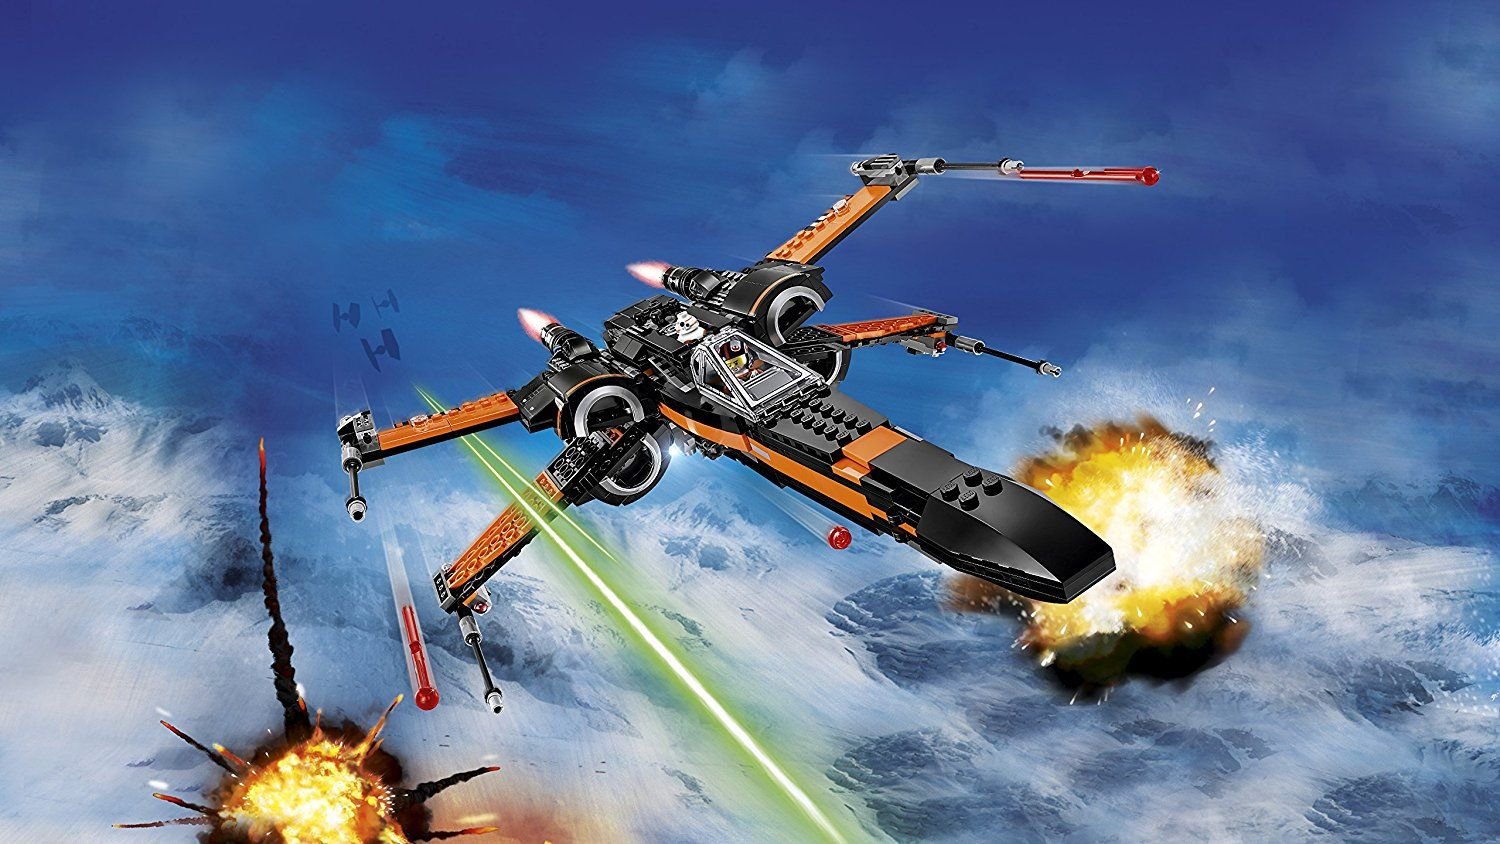 X-Wing Poe Dameron Lego Star Wars